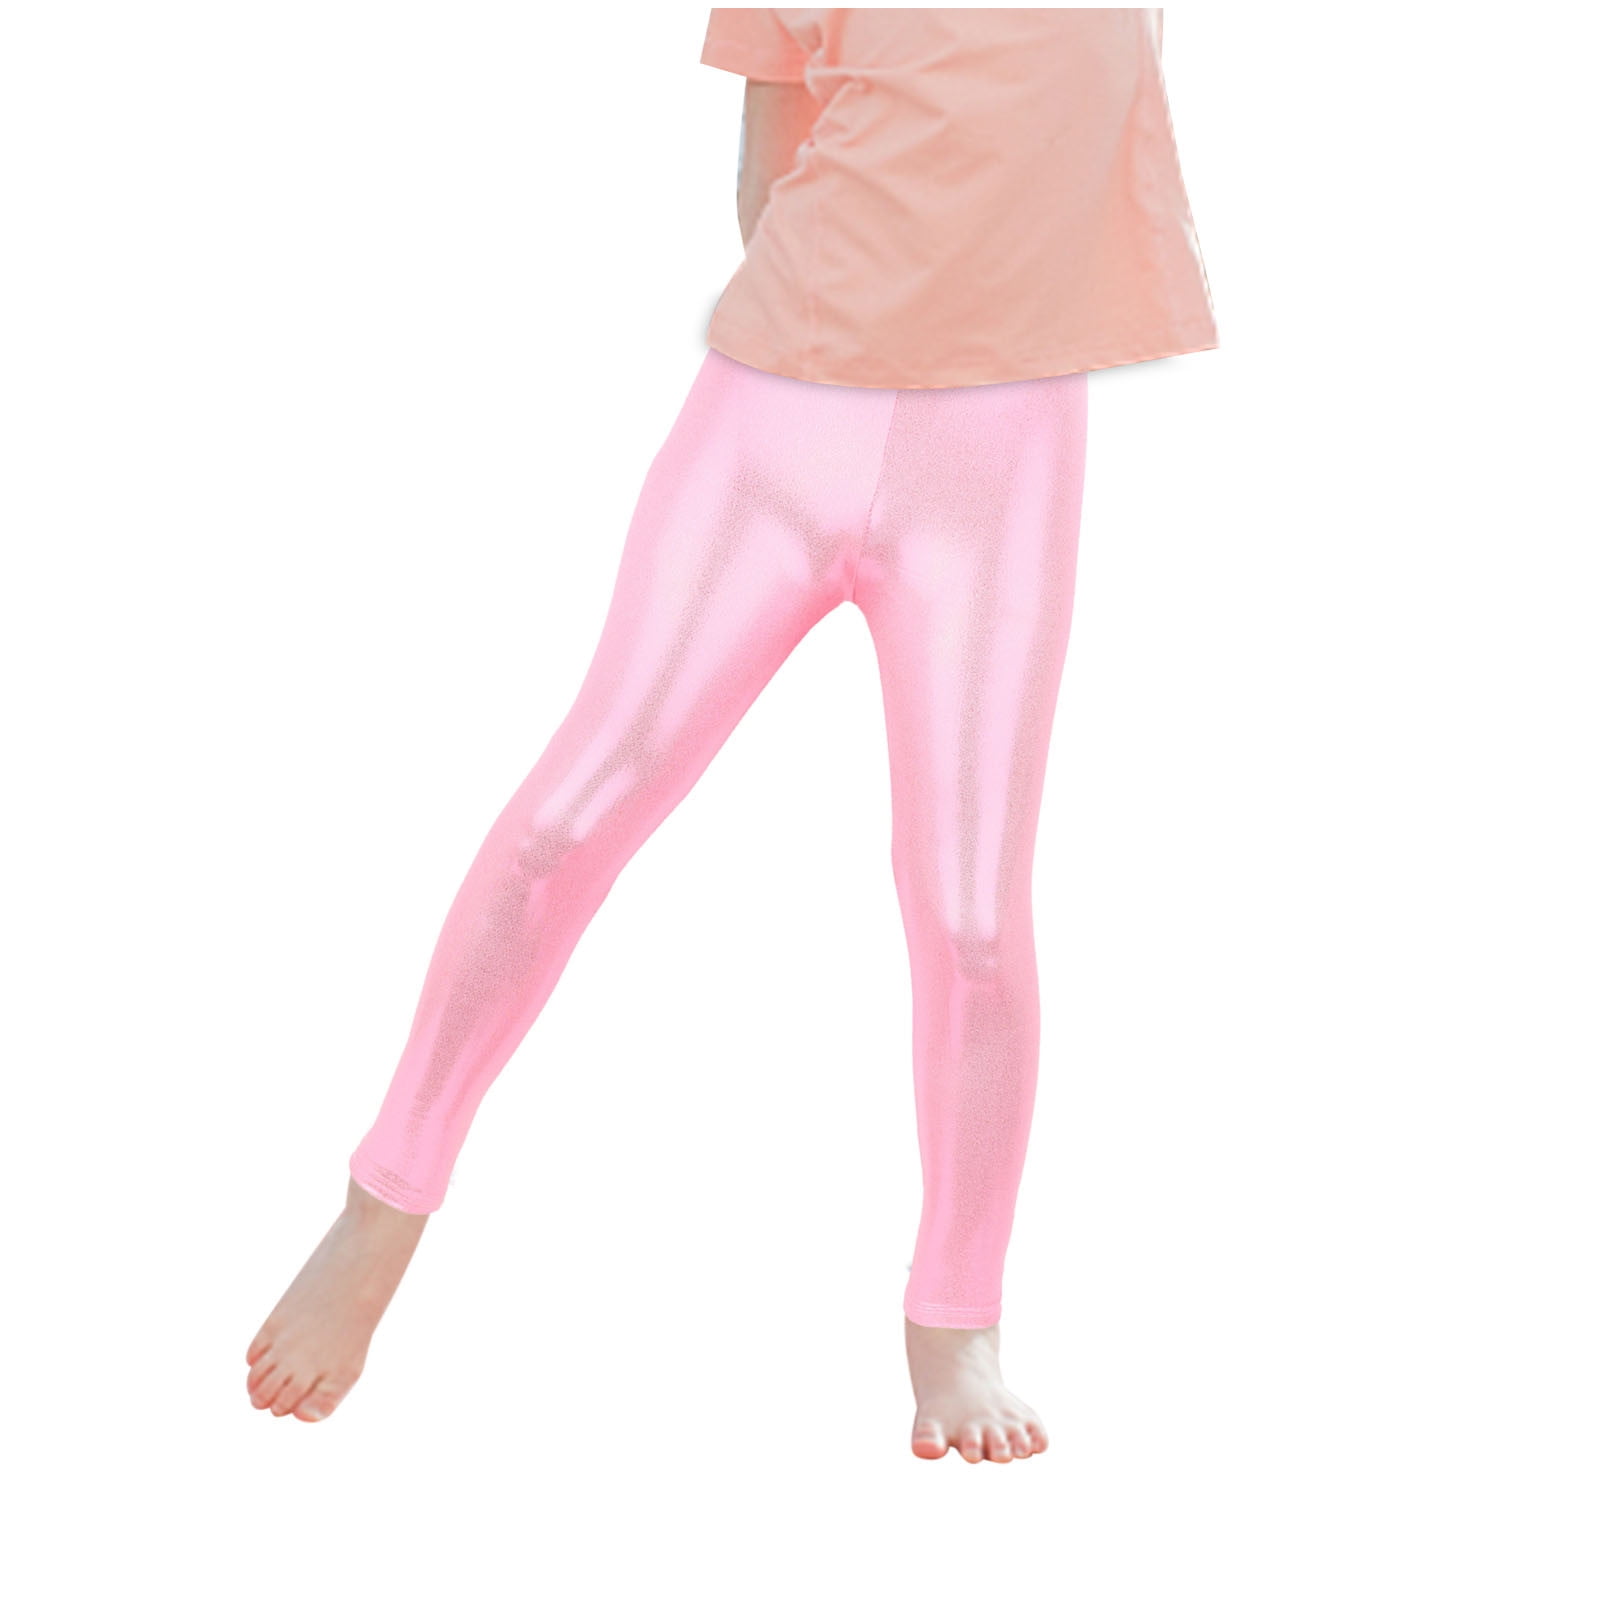 ZKCCNUK Plus Size Crz Yoga Shorts Kids Girls Fitness Dance Pants